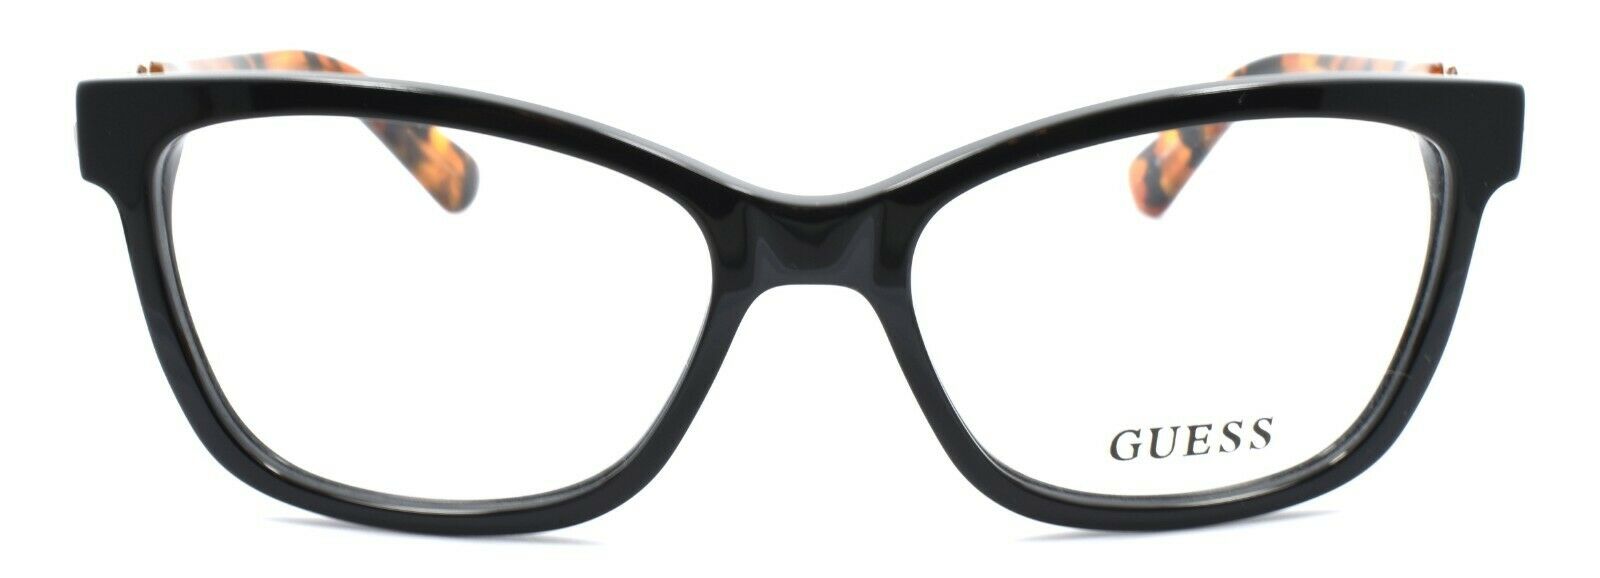 2-GUESS GU2492 001 Women's Eyeglasses Frames 52-16-135 Shiny Black / Multicolor-664689697427-IKSpecs